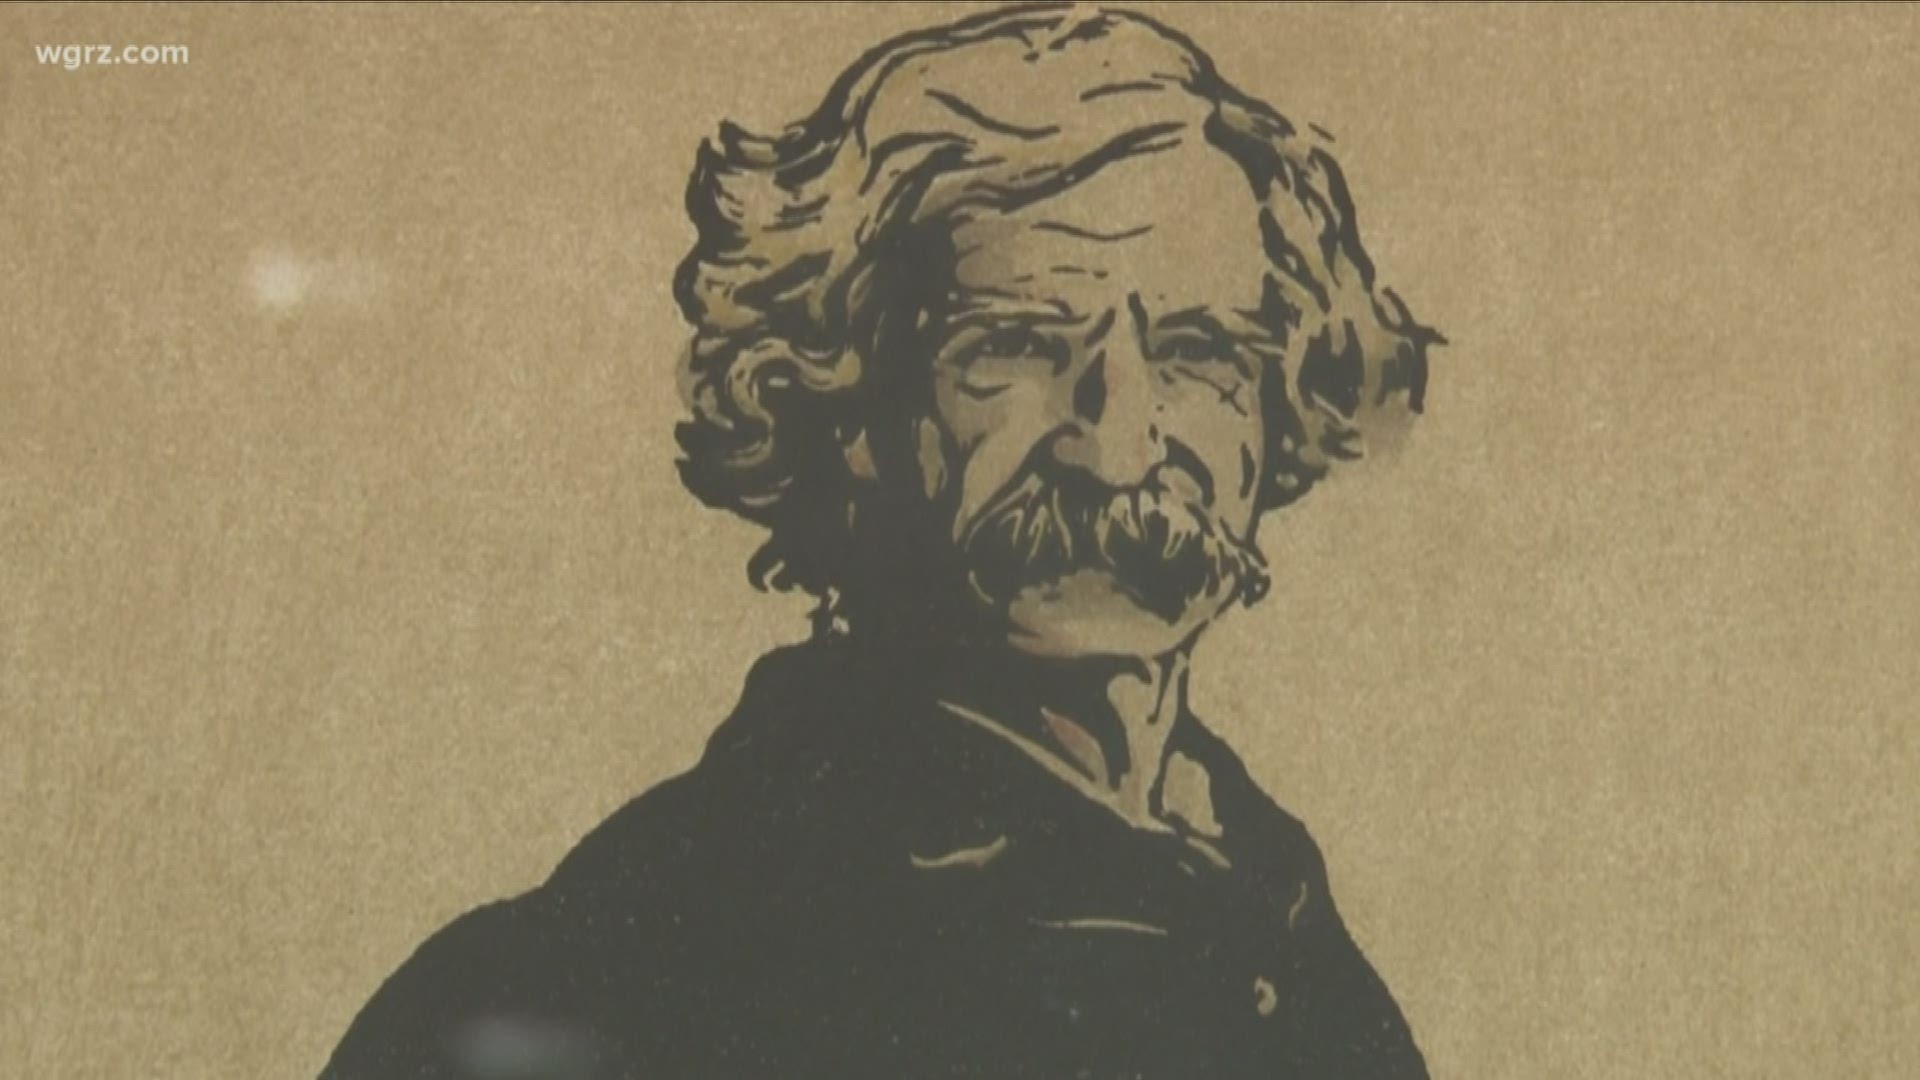 Unknown stories of WNY: Mark Twain's original manuscript